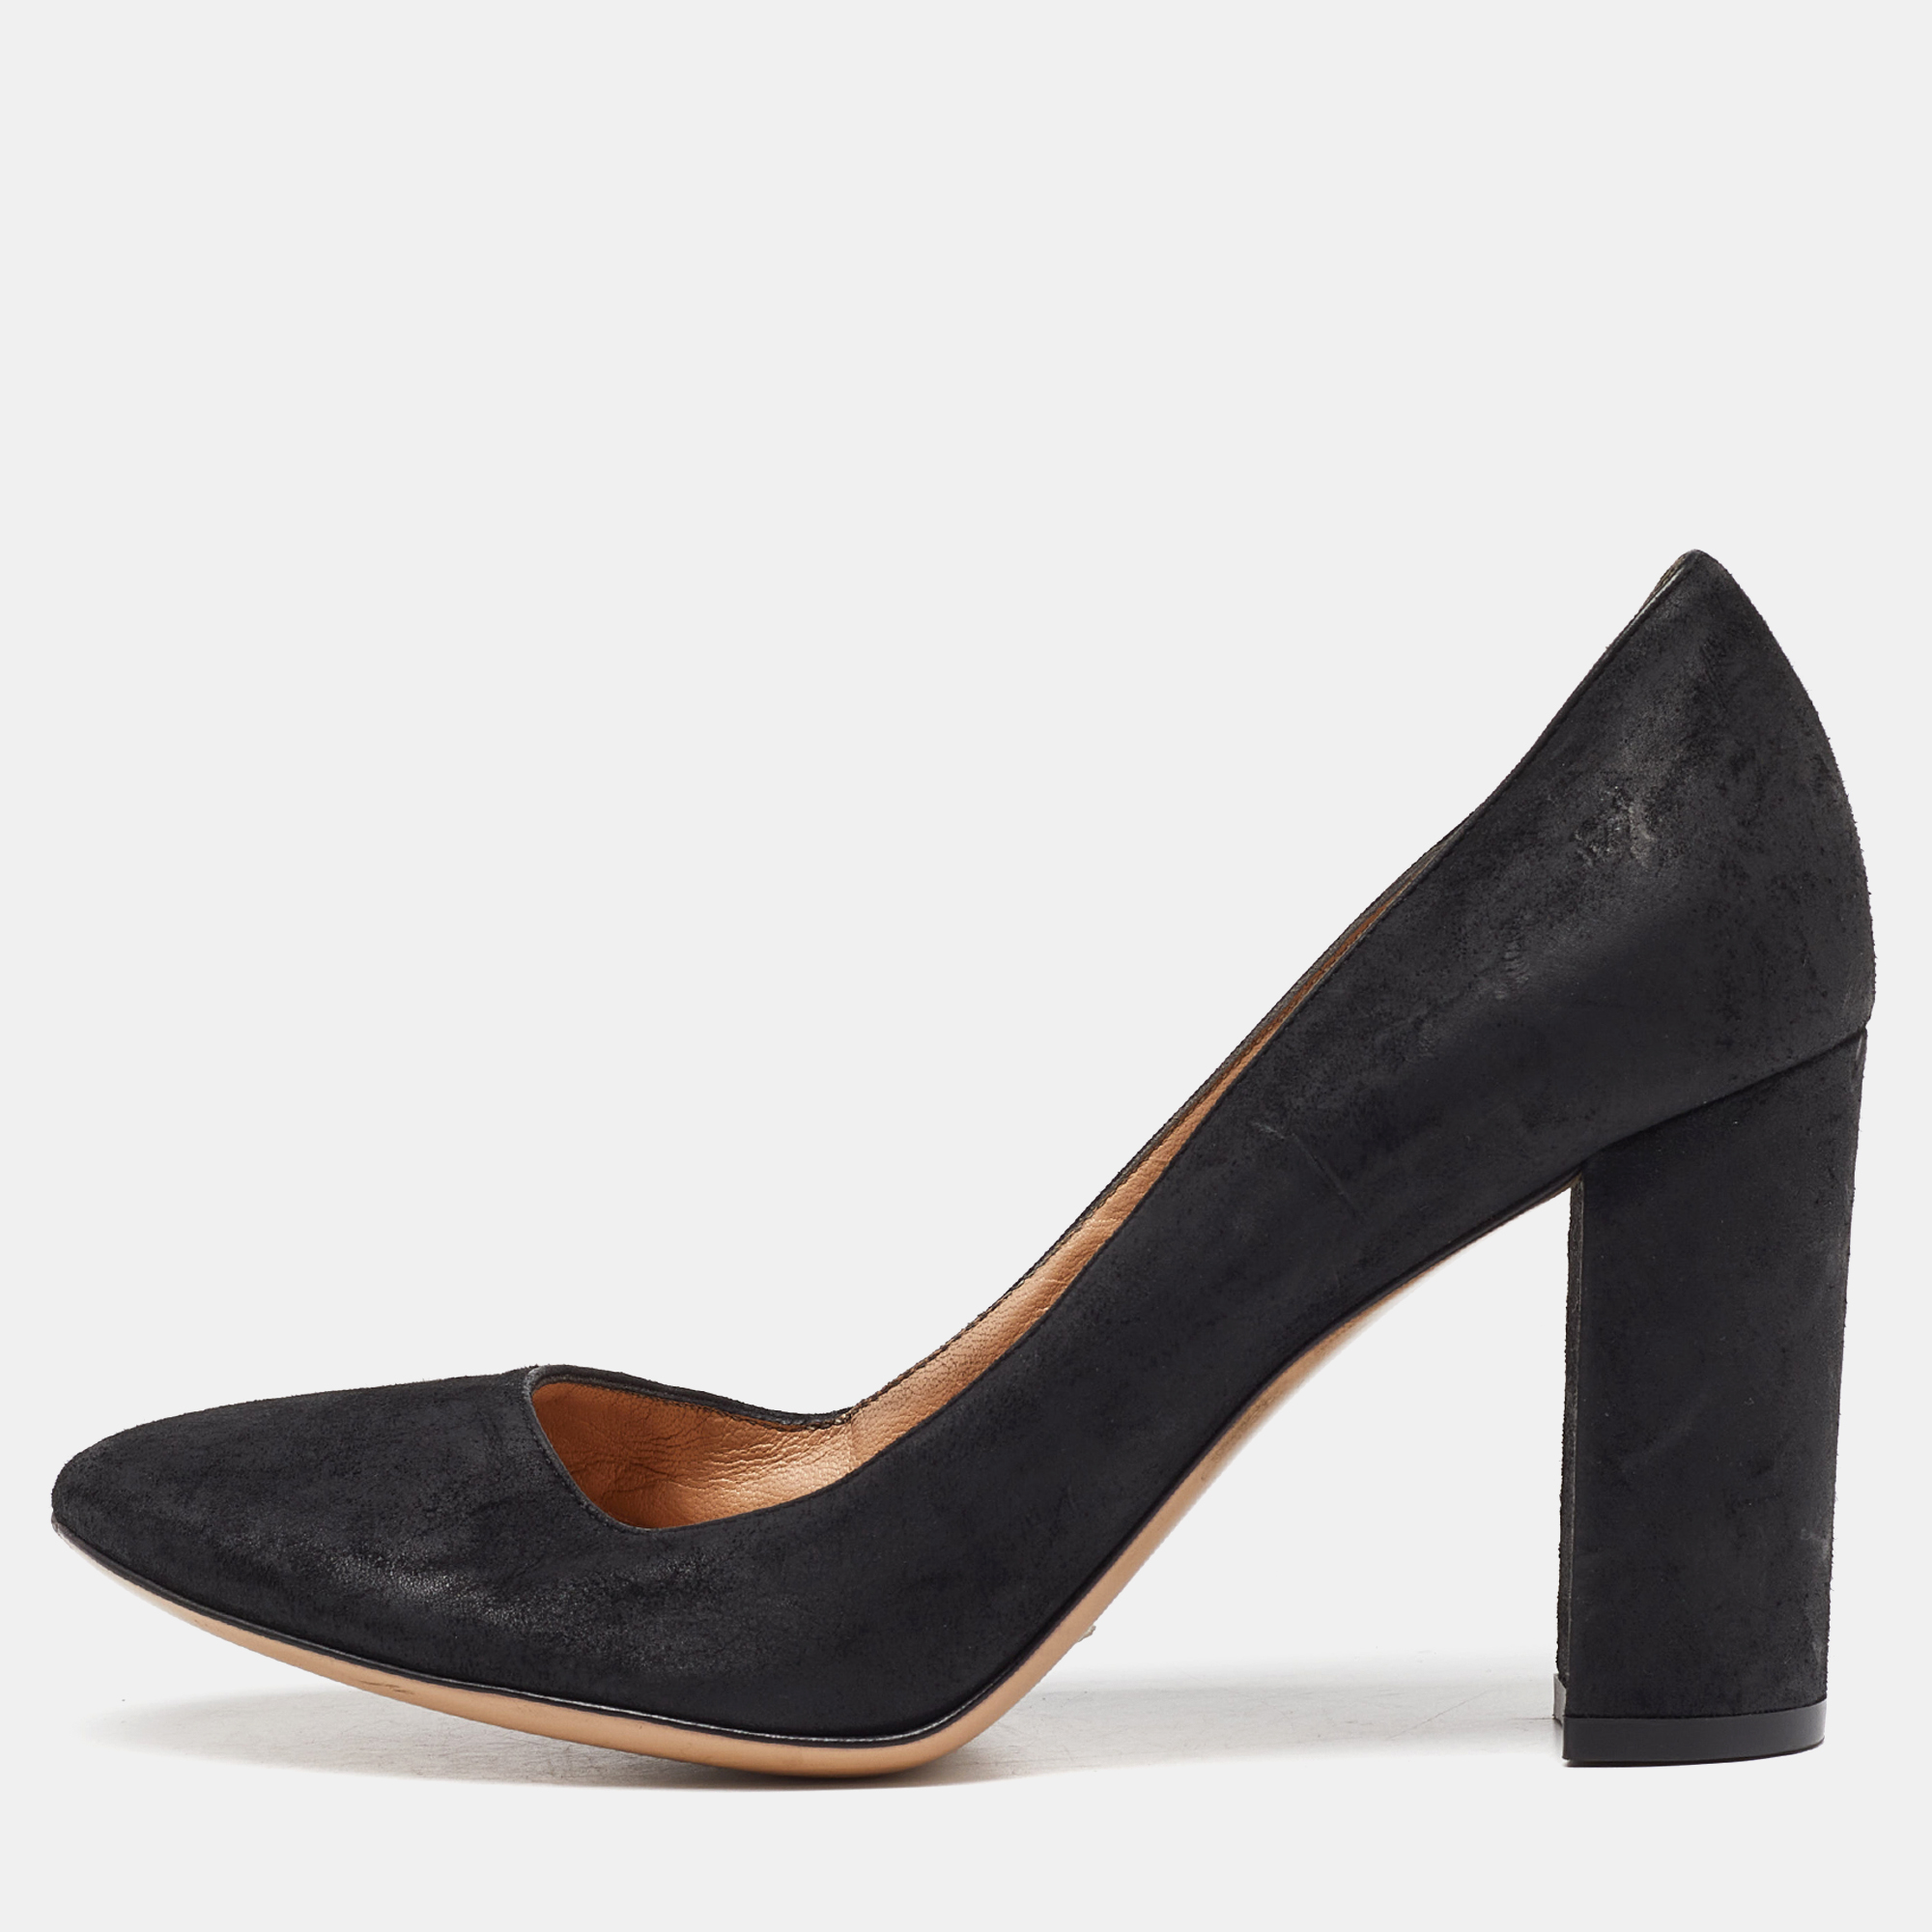 Gianvito rossi black nubuck leather block heel pumps size 37.5